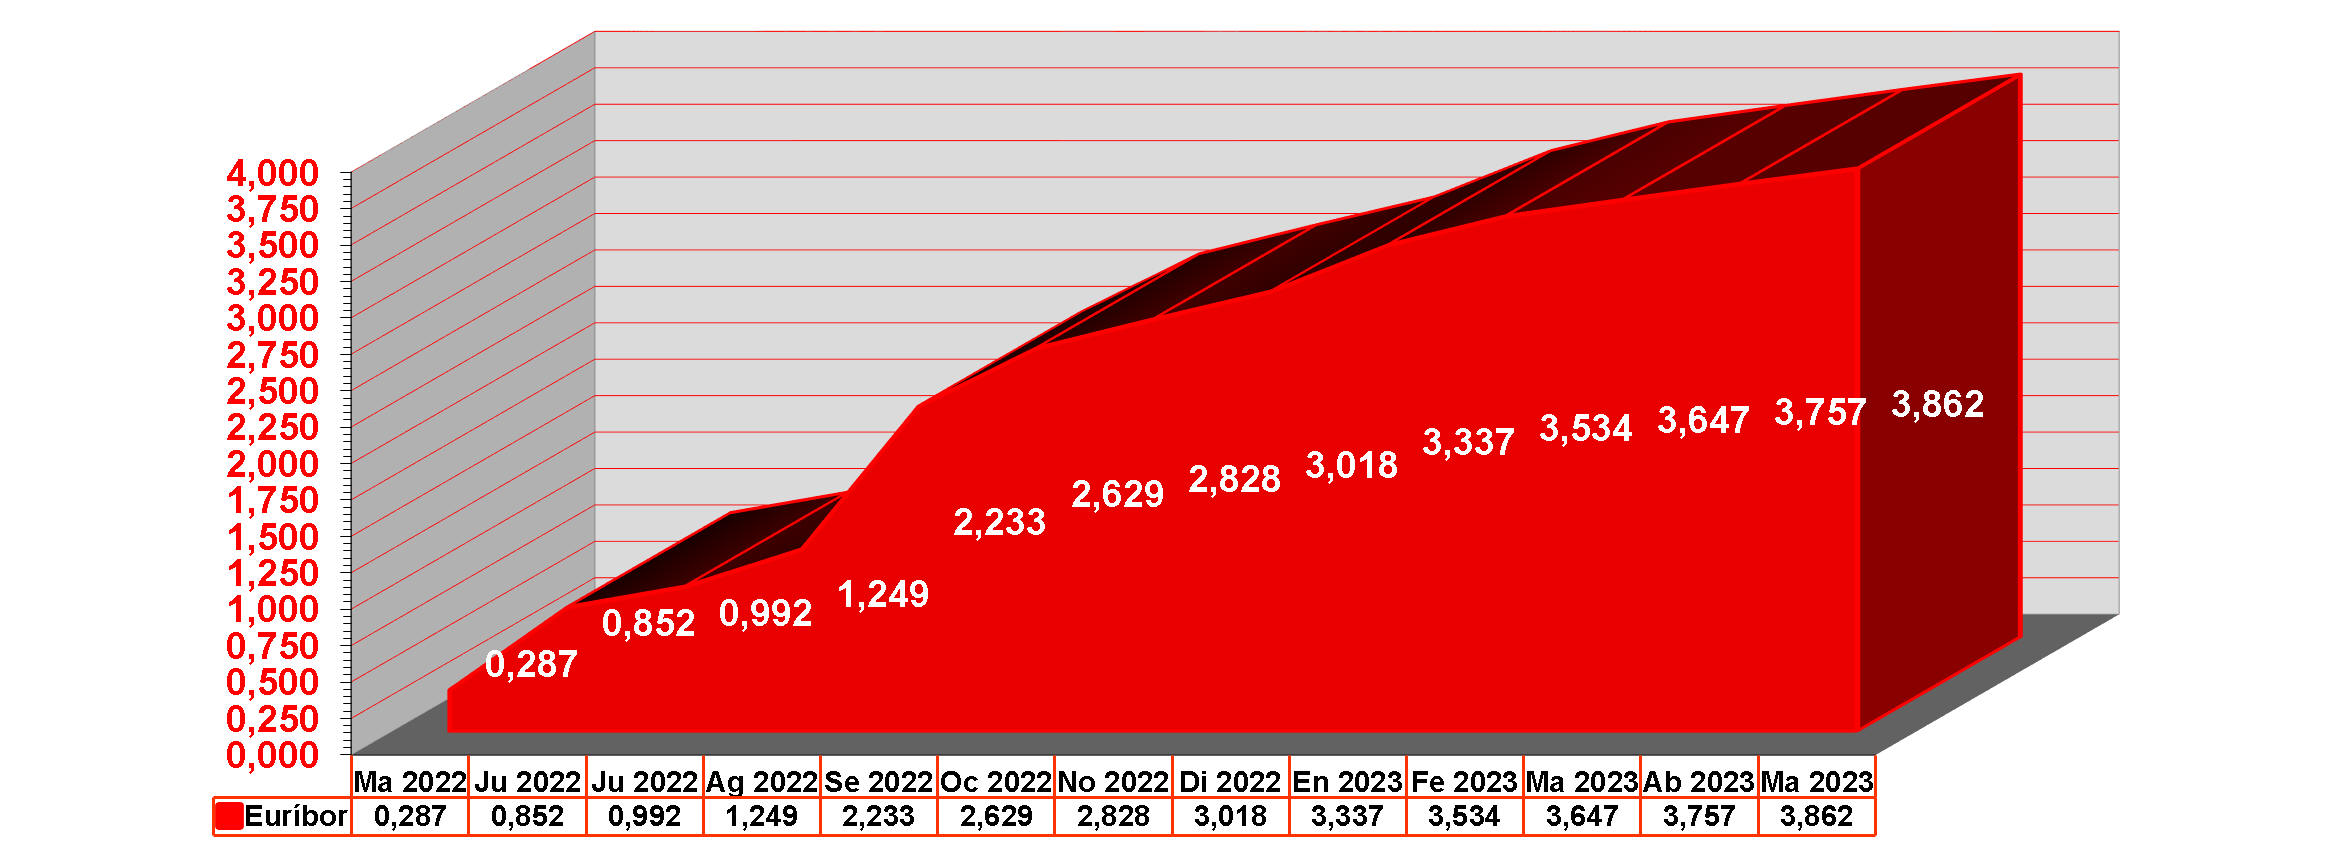 grafico-anual-euribor-desde-mayo-2022-hasta-mayo-2023